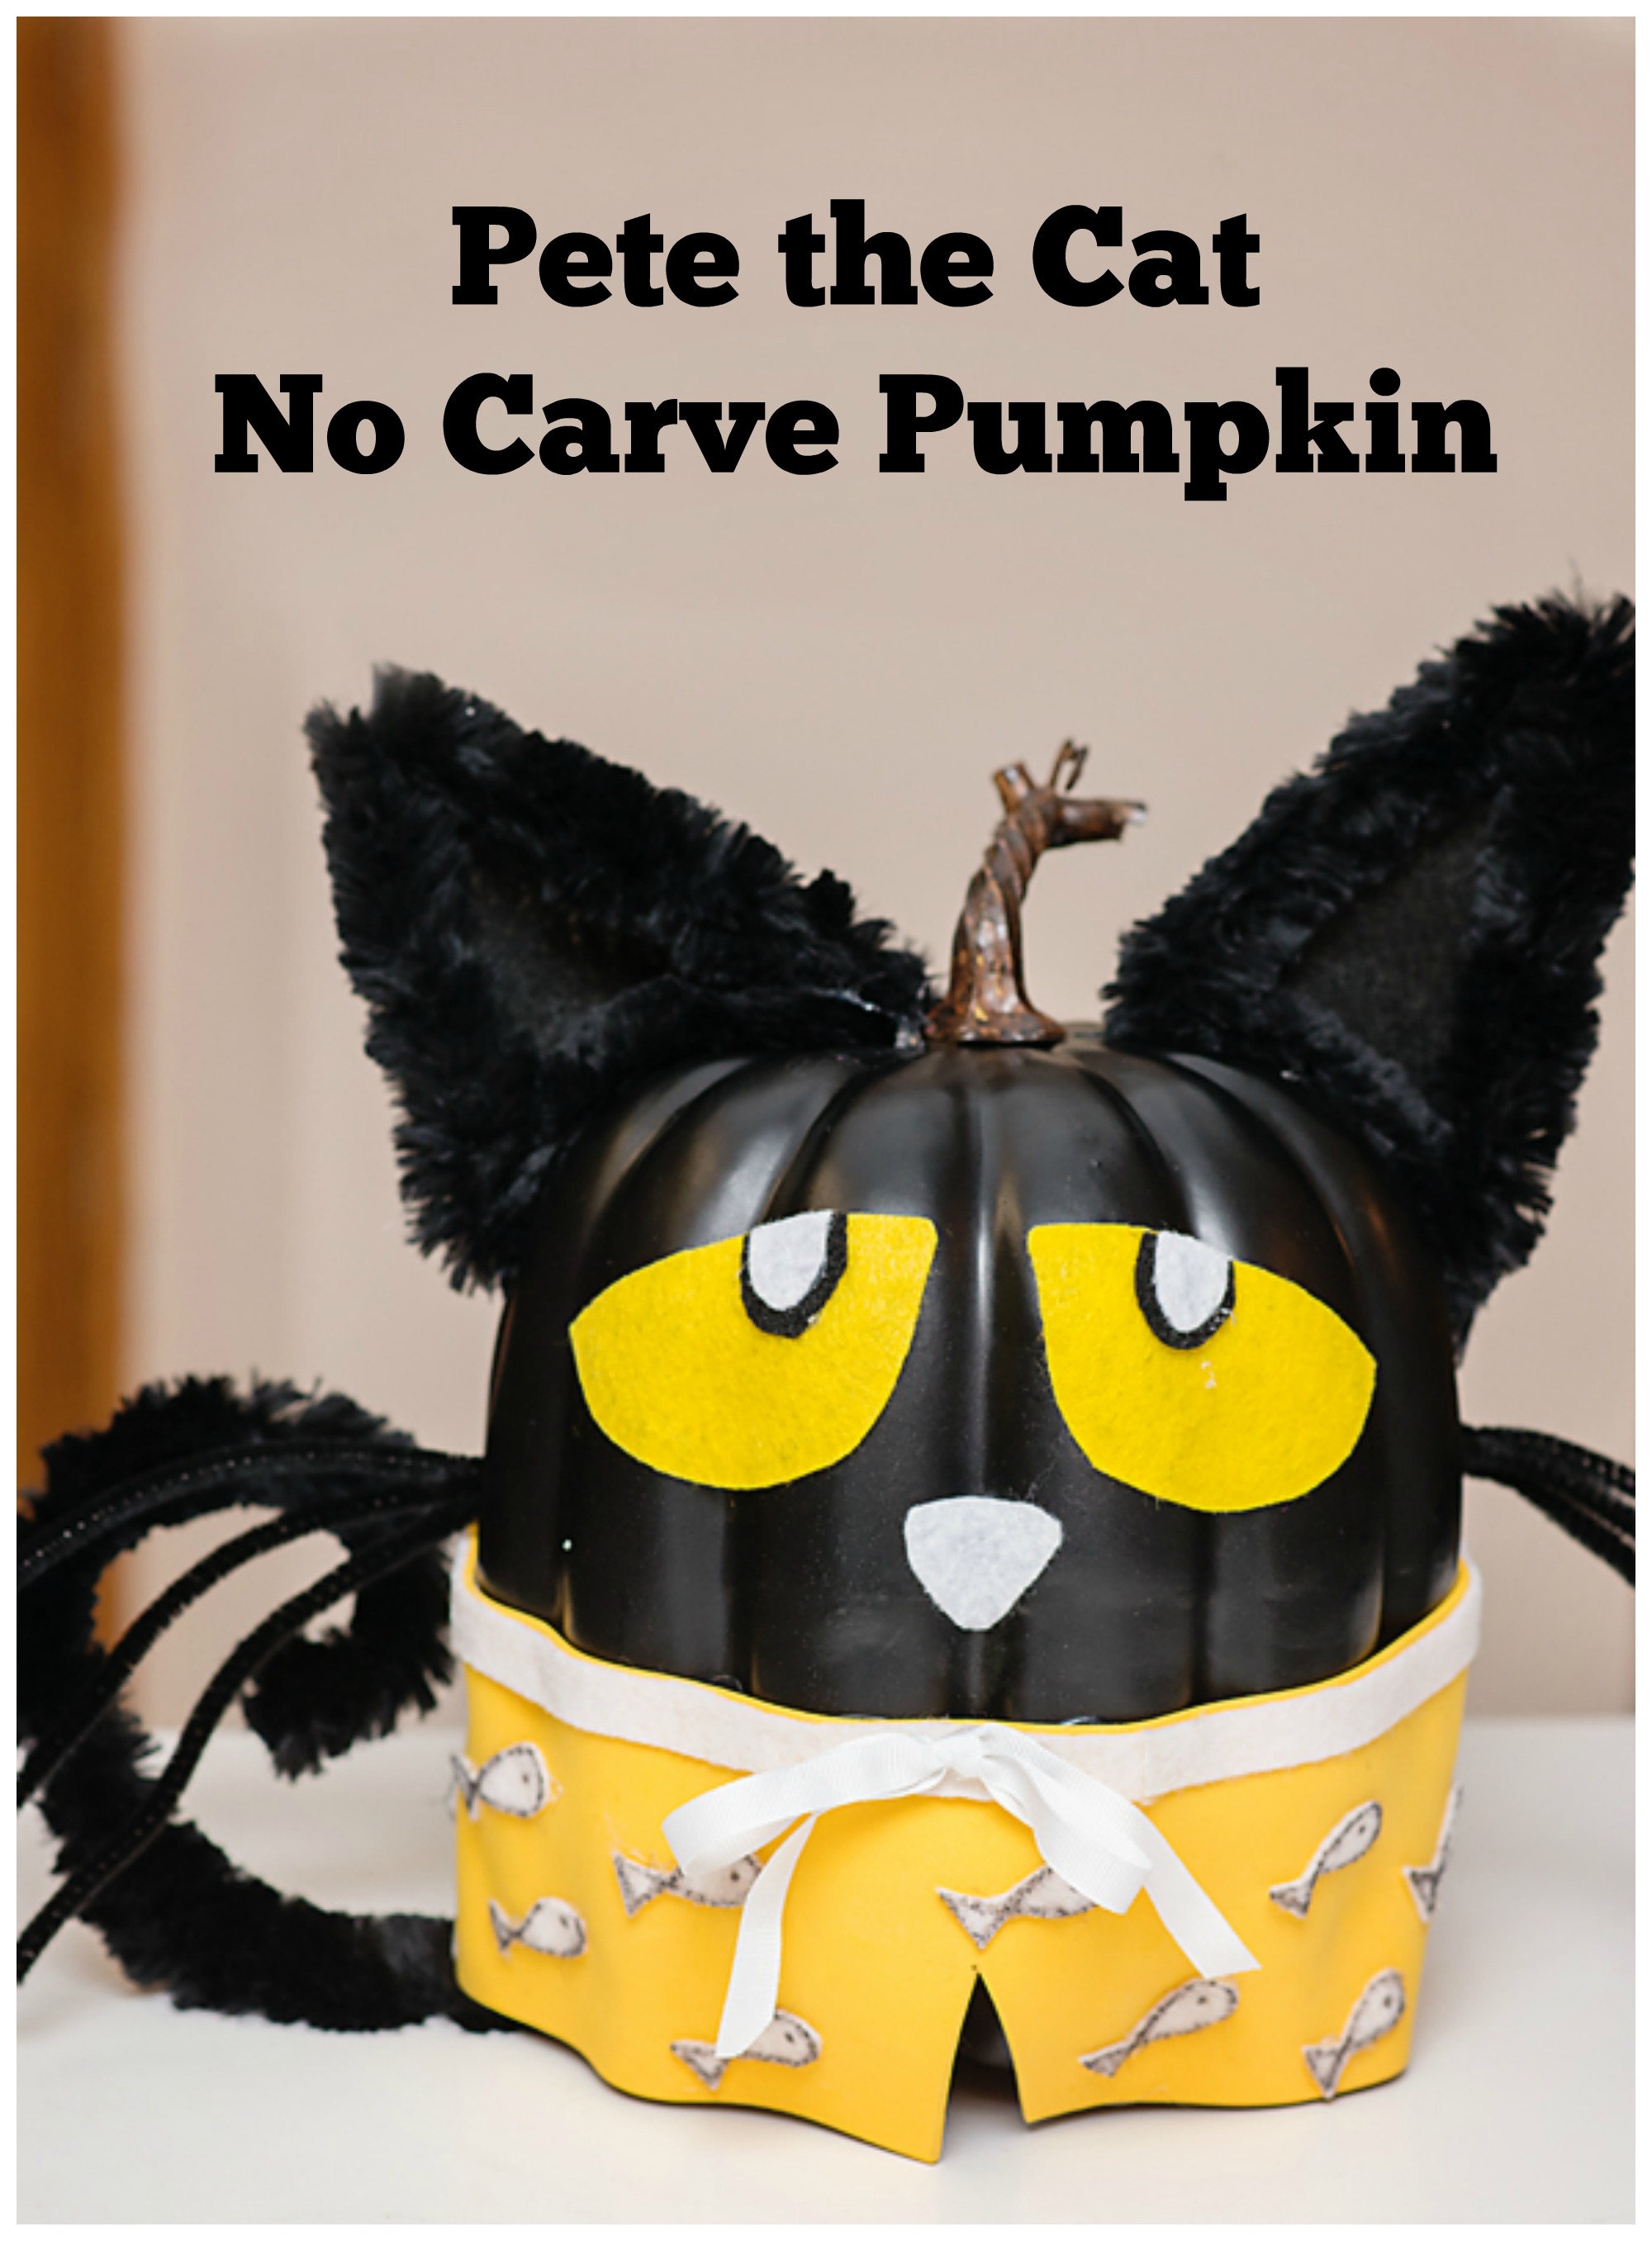 Pete the Cat - No Carve Pumpkin Decorating